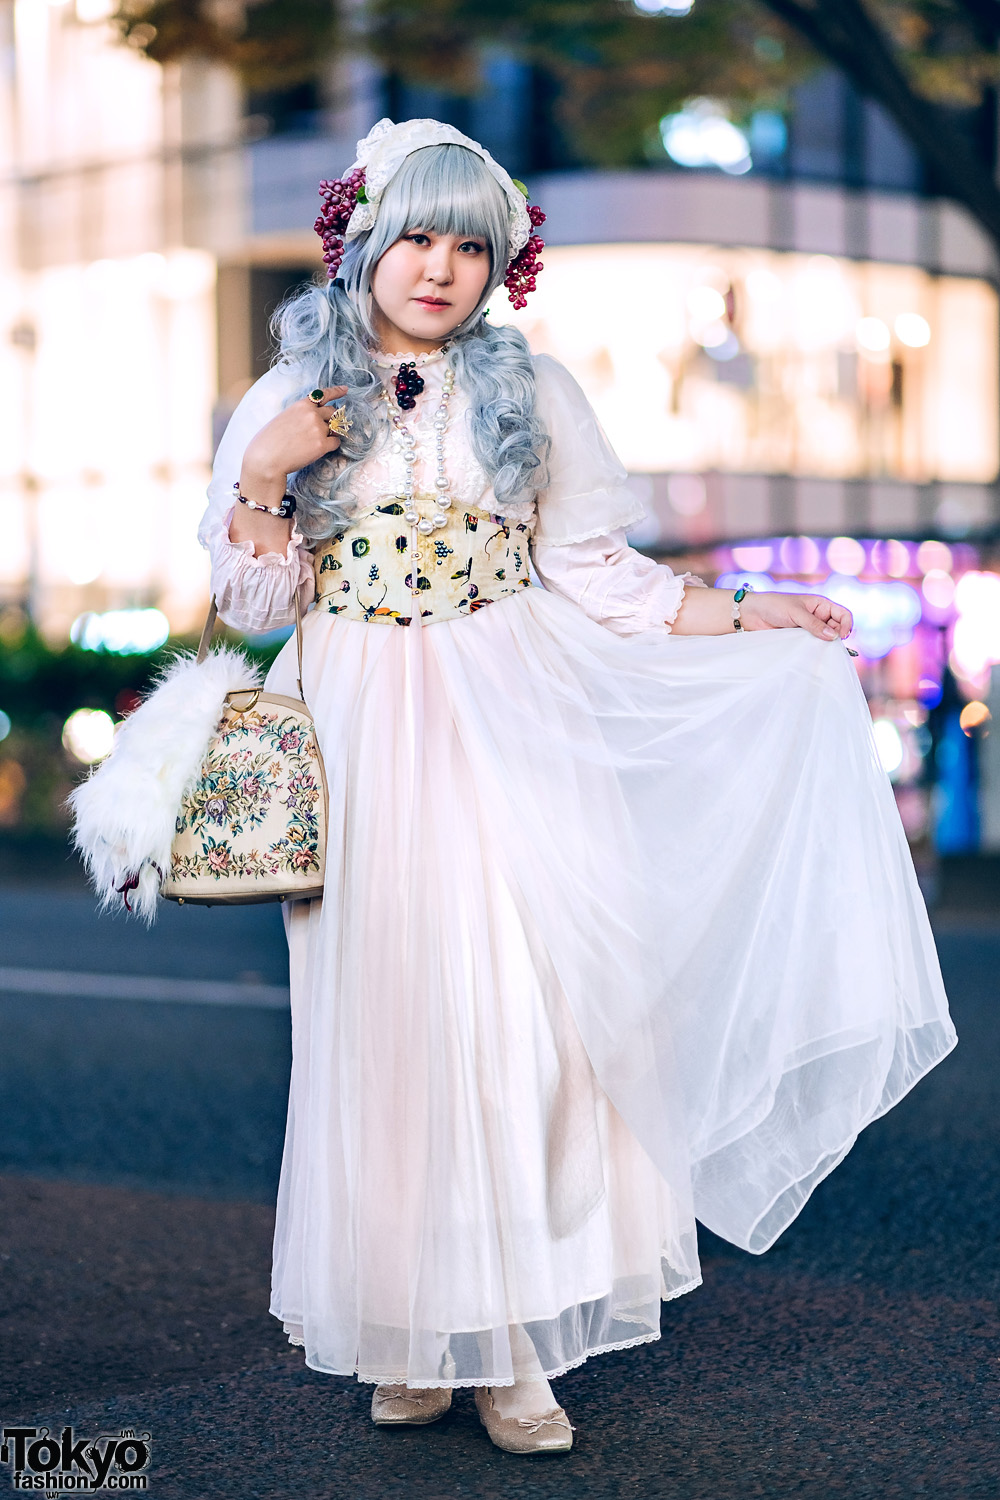 Harajuku Vintage & Handmade Lolita Fashion w/ Grapes Headdress, Pays Des Fees, Nice Claup & Milk